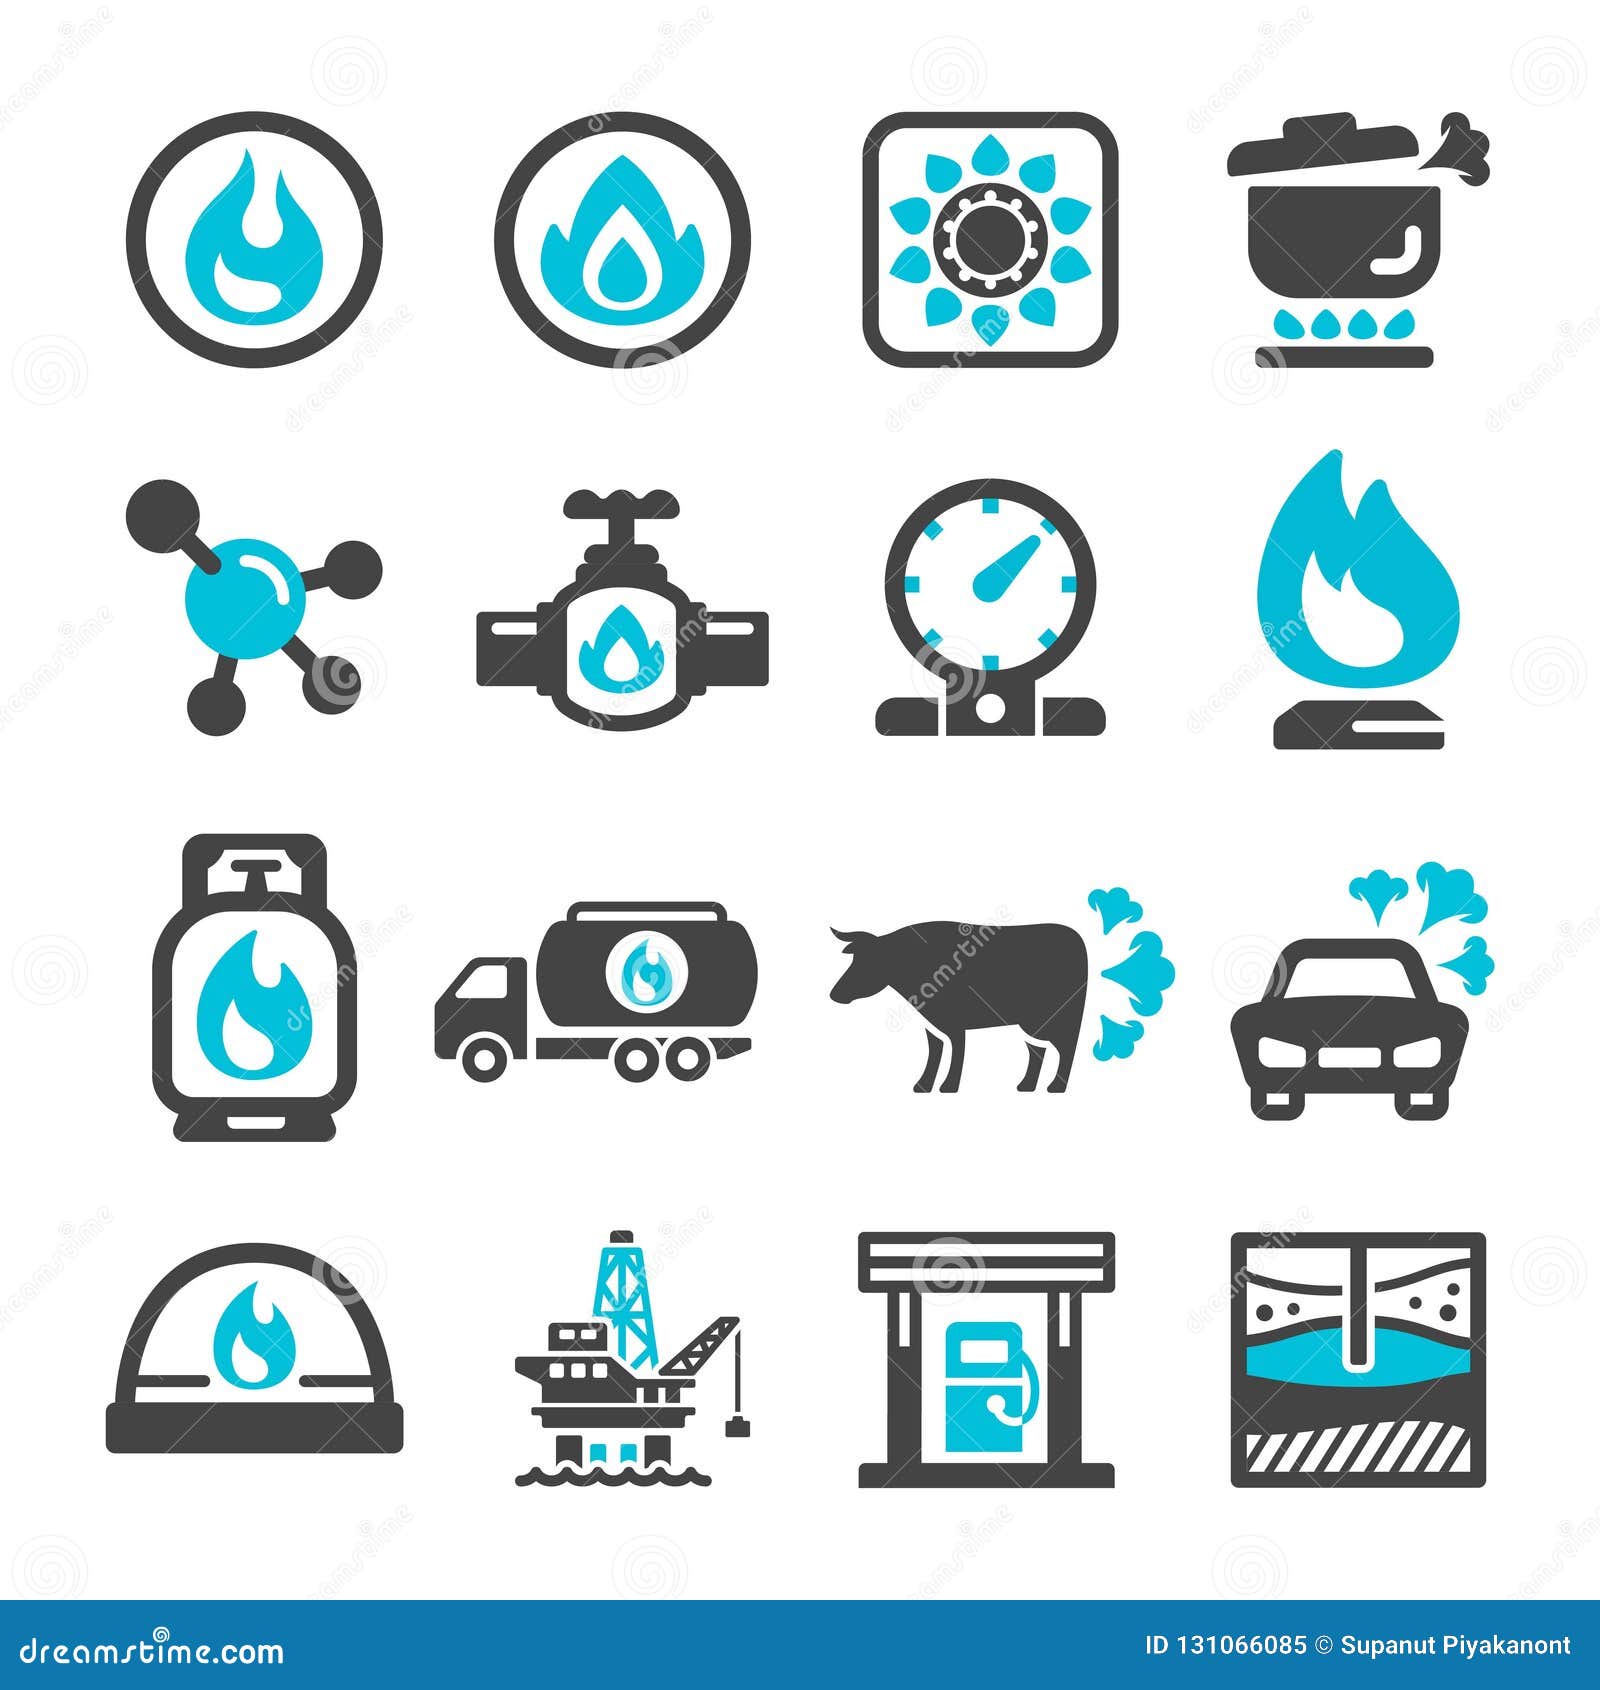 natural gas icon set